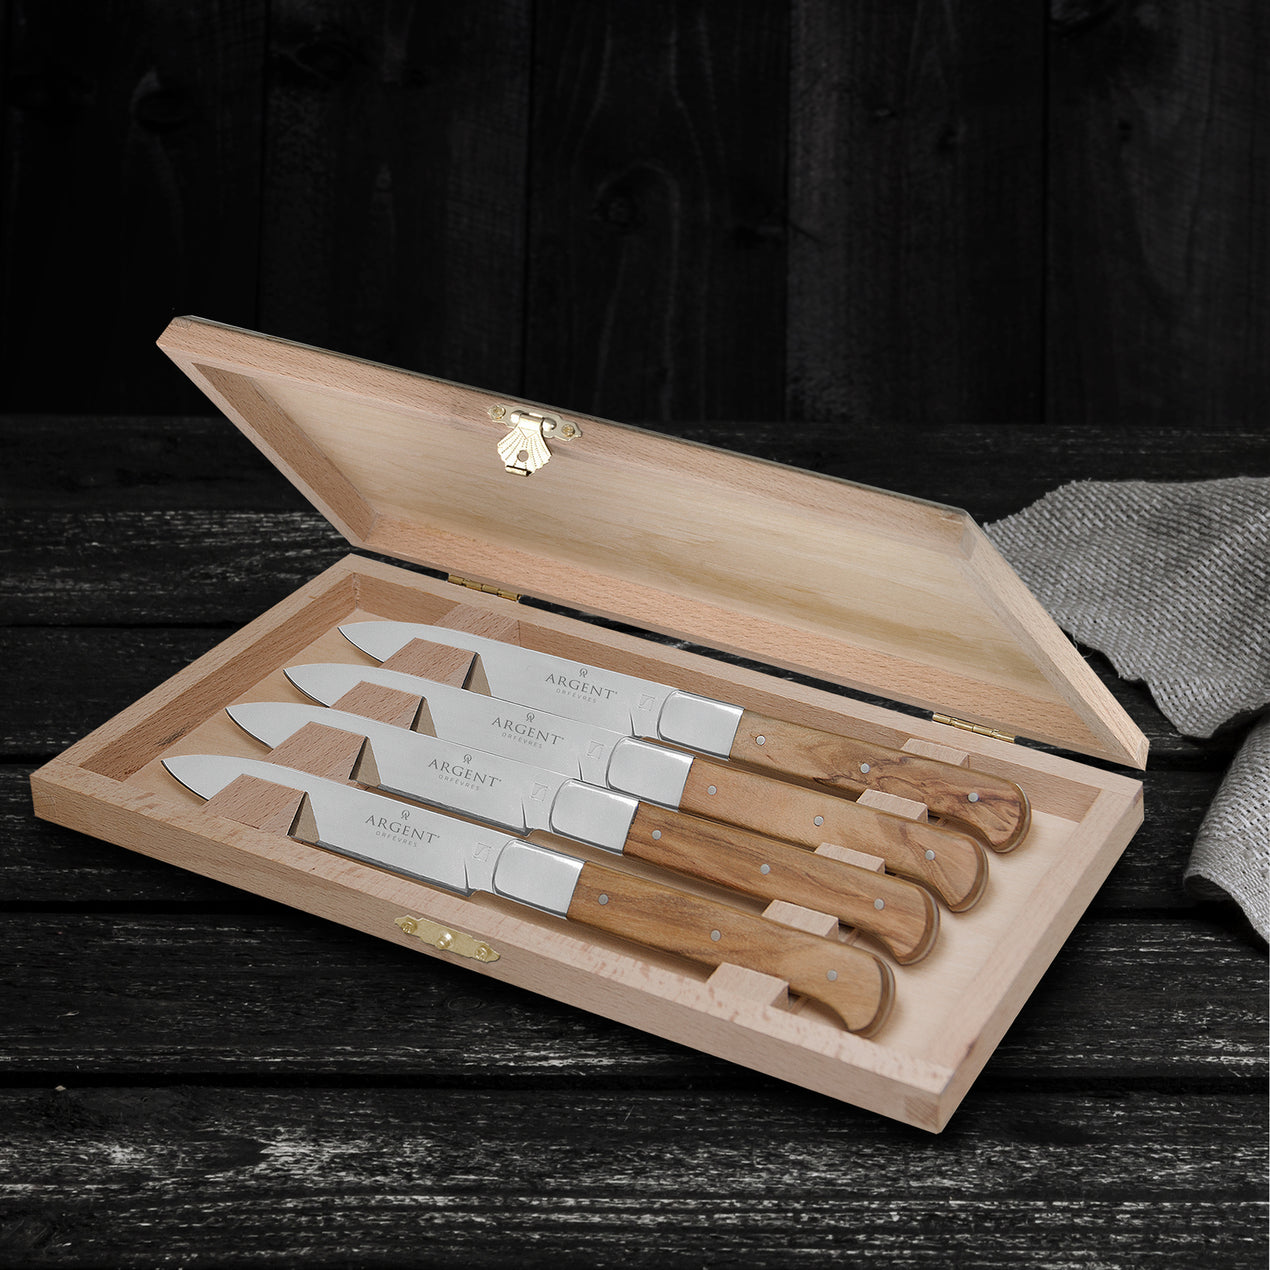 LionSteel 4 Piece Steak Knife Set in Wooden Gift Box, Olive Wood Handle